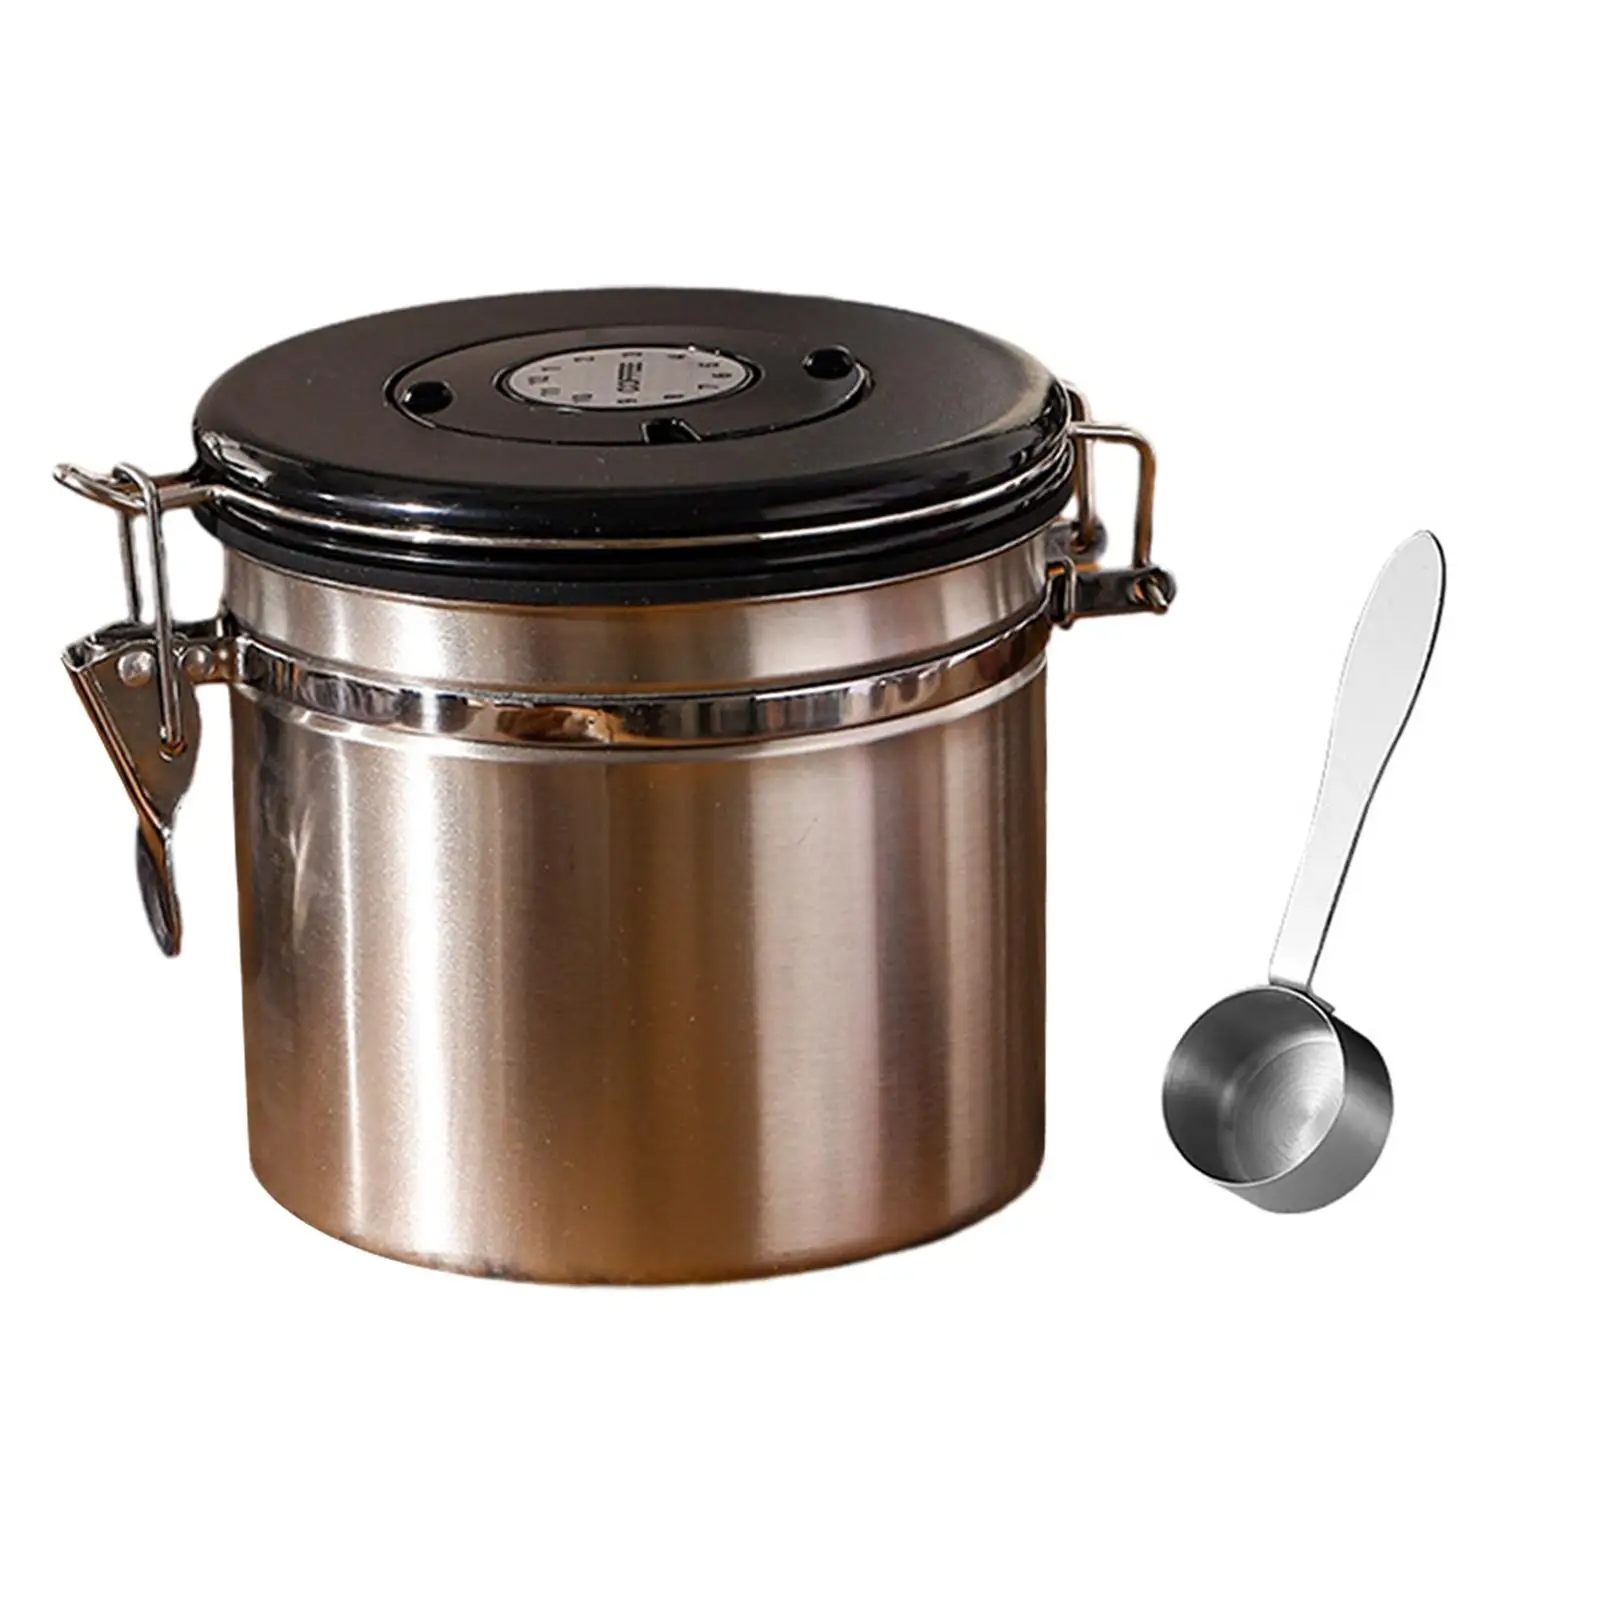 Coffee Bean Storage Storage Utensils with Steel Spoon Airtight Storage Tank for